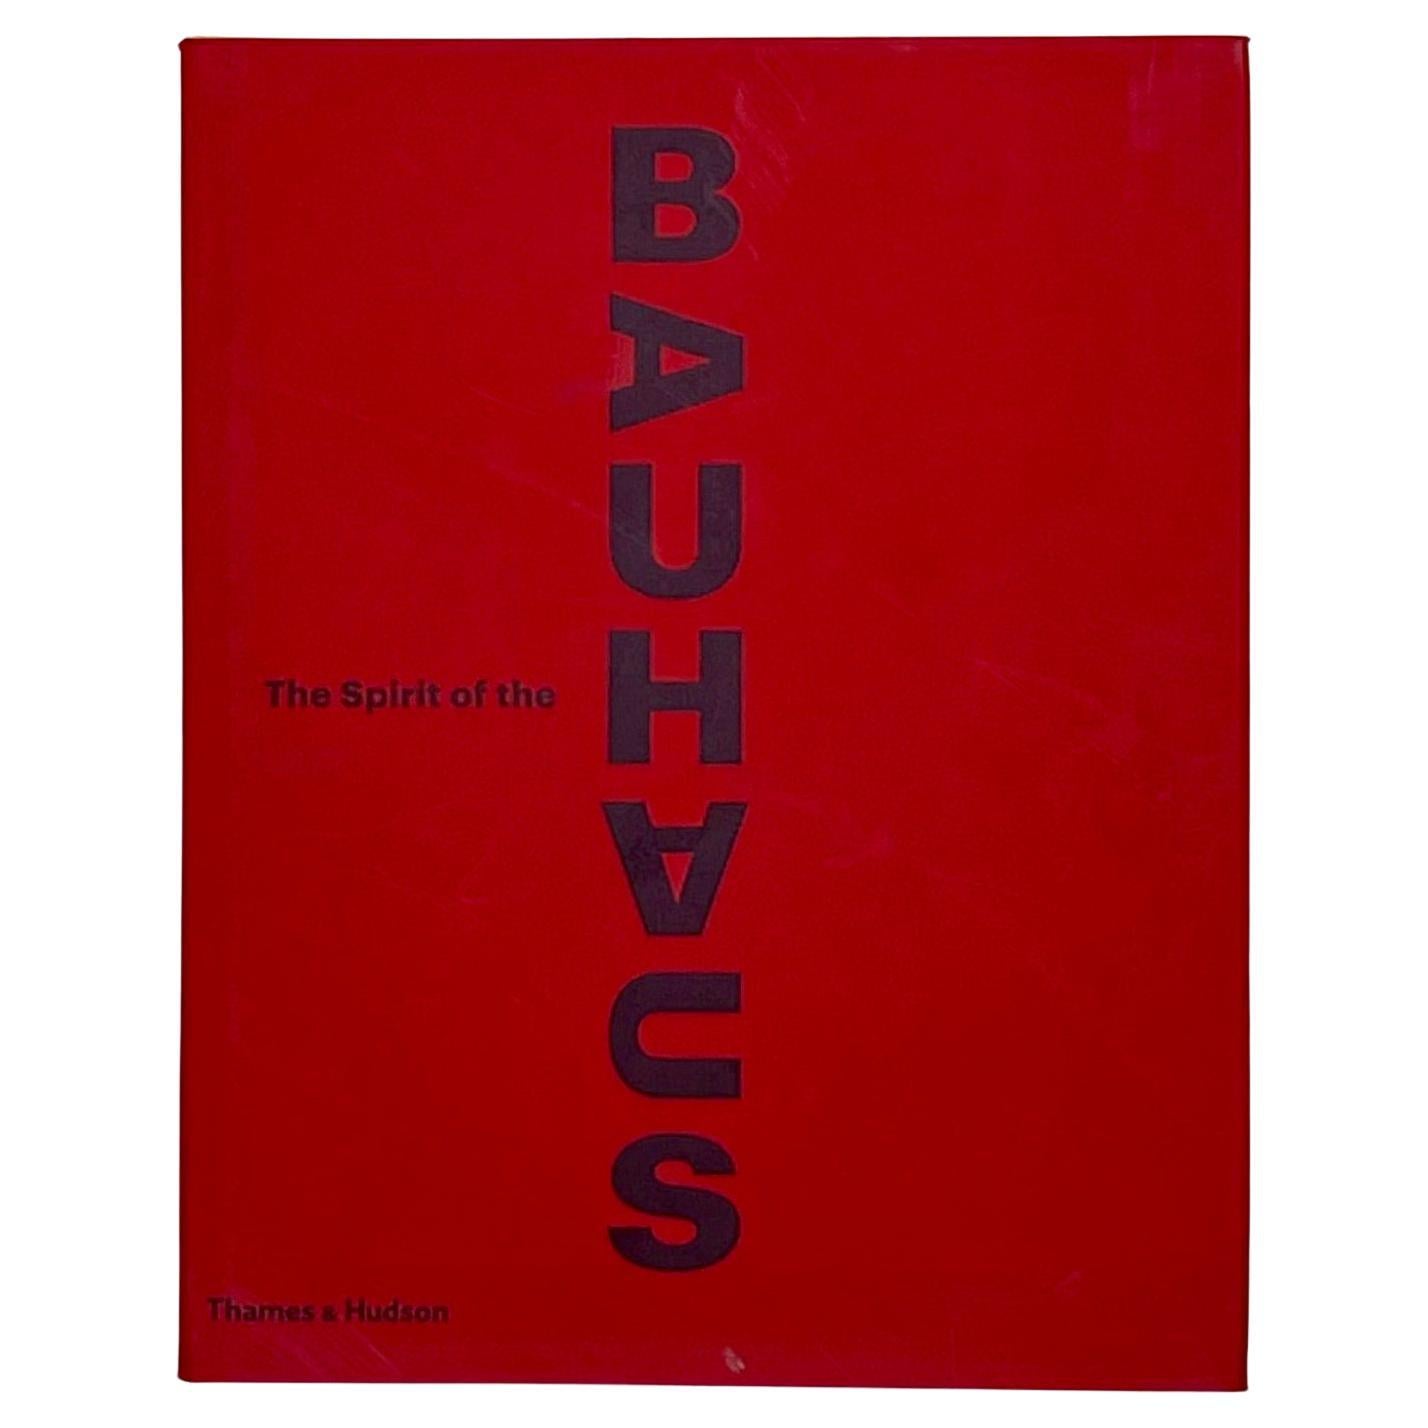 The Spirit of the Bauhaus - Anne Monier, Olivier Gabet - Thames & Hudson, 2018